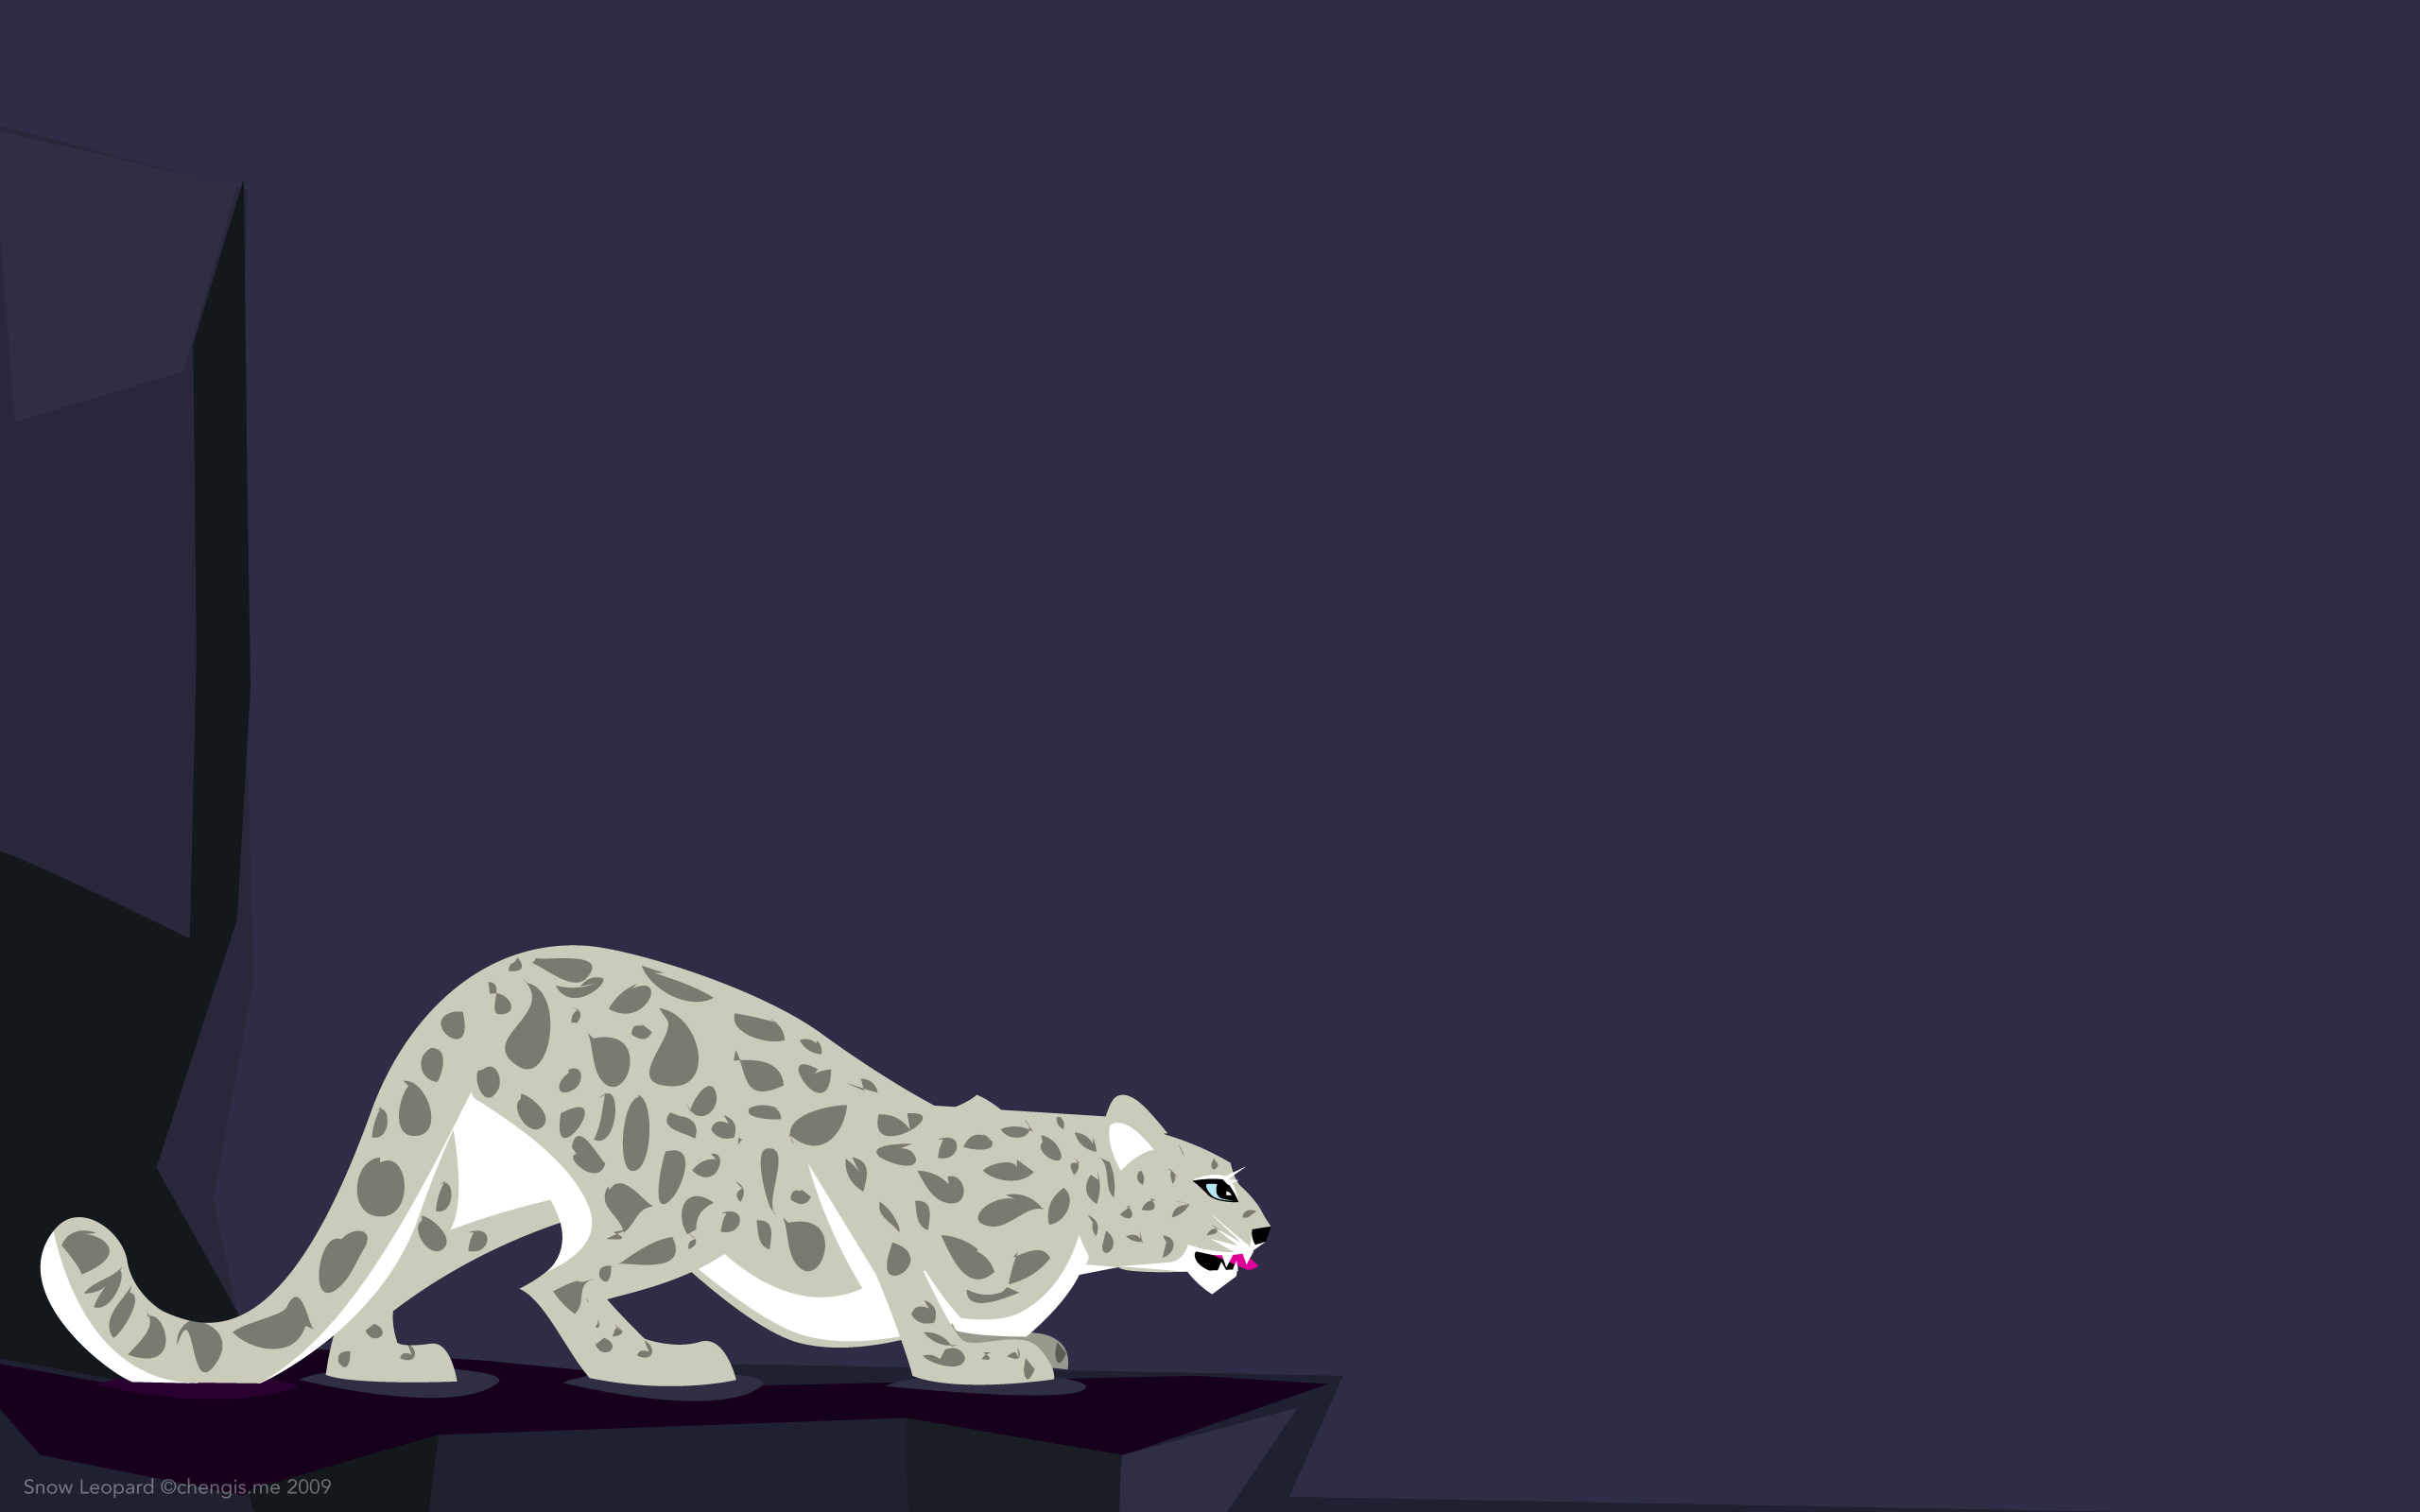 Wallpaper: Snow Leopard. chengis